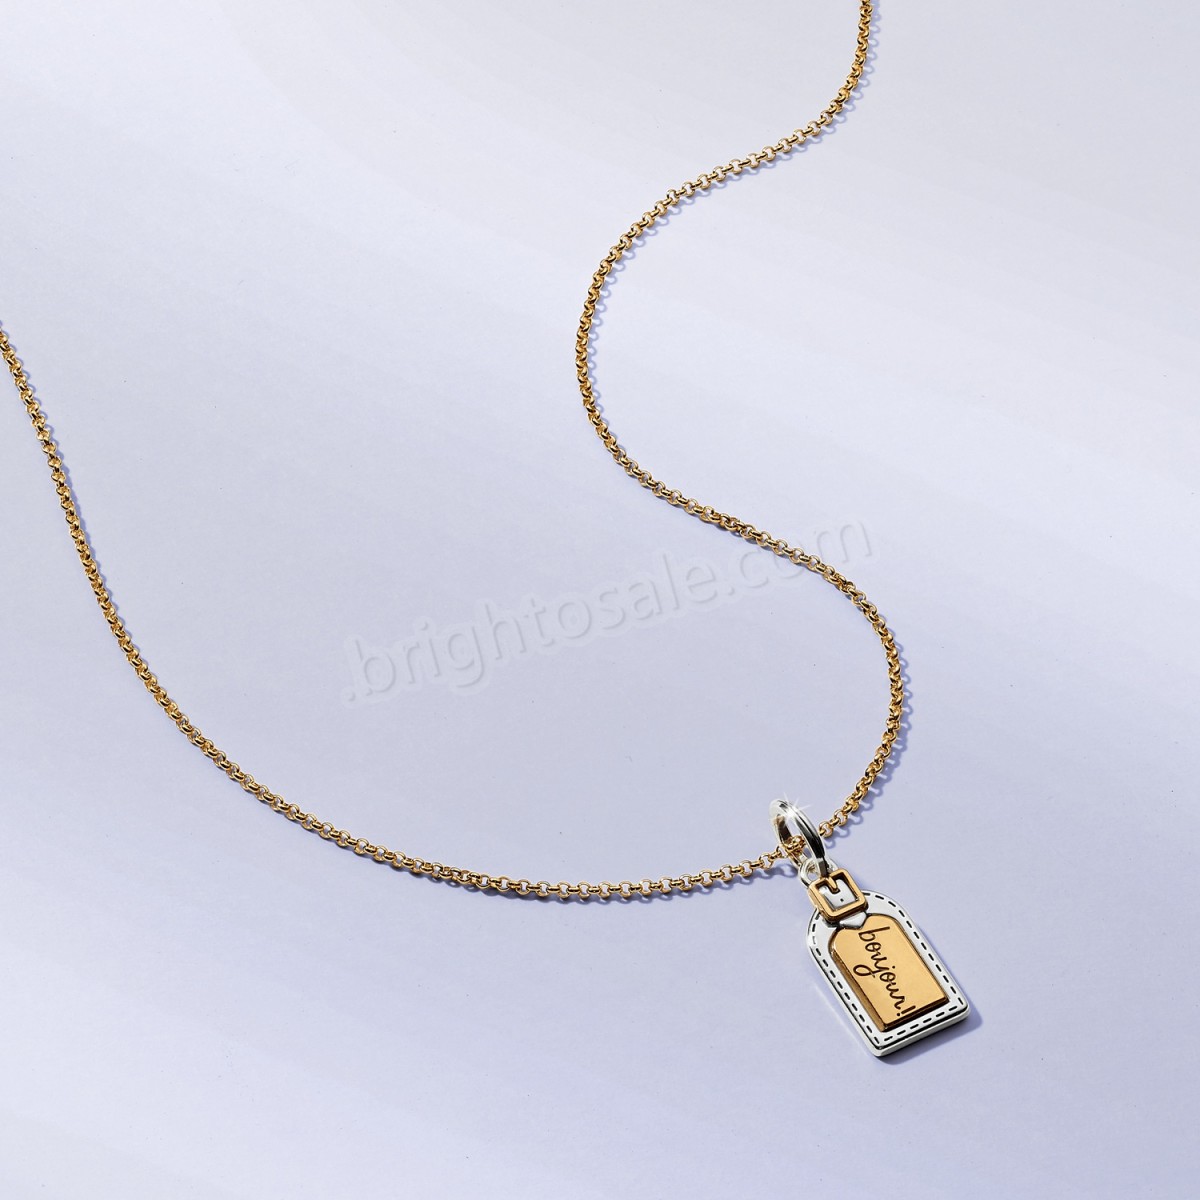 Brighton Collectibles & Online Discount Luminous Amulet Necklace Gift Set - -0